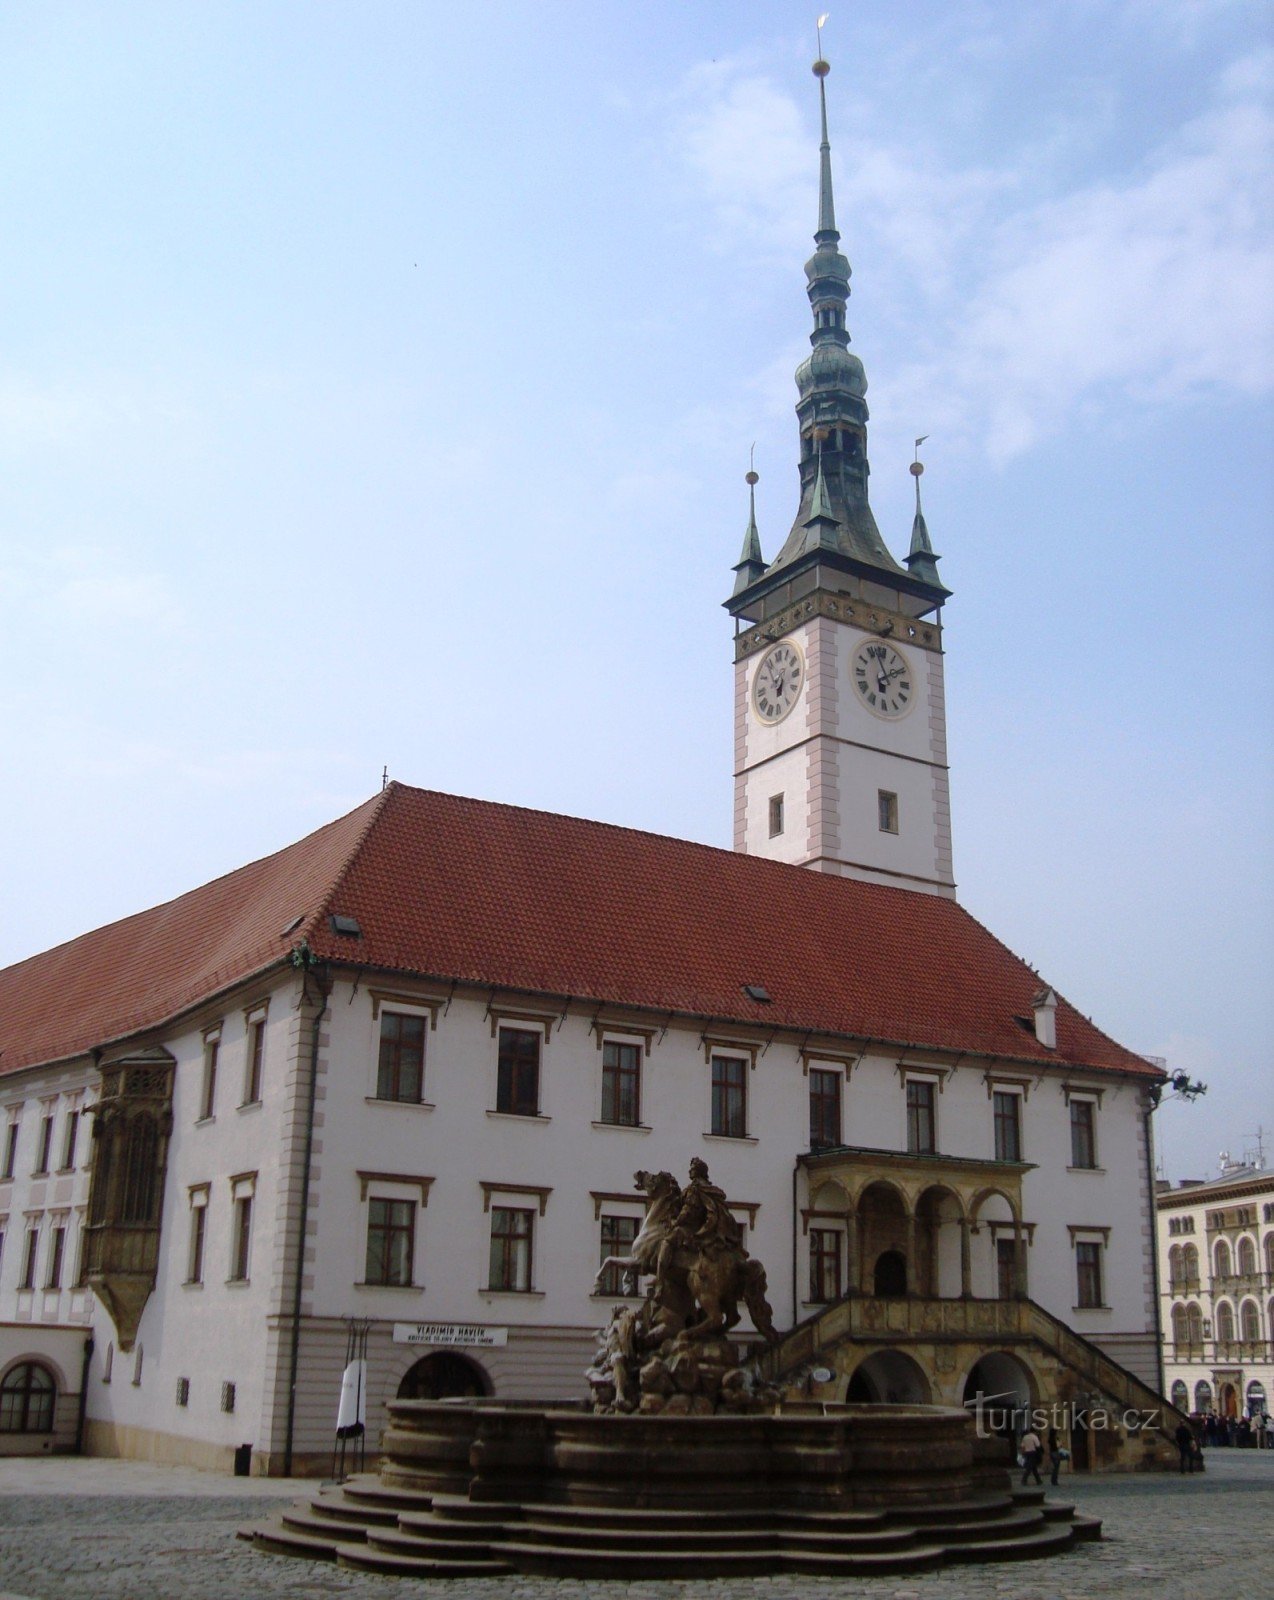 Olomouc-Horní náměstí-Fontaine de César de 1725 et la mairie-Photo: Ulrych Mir.